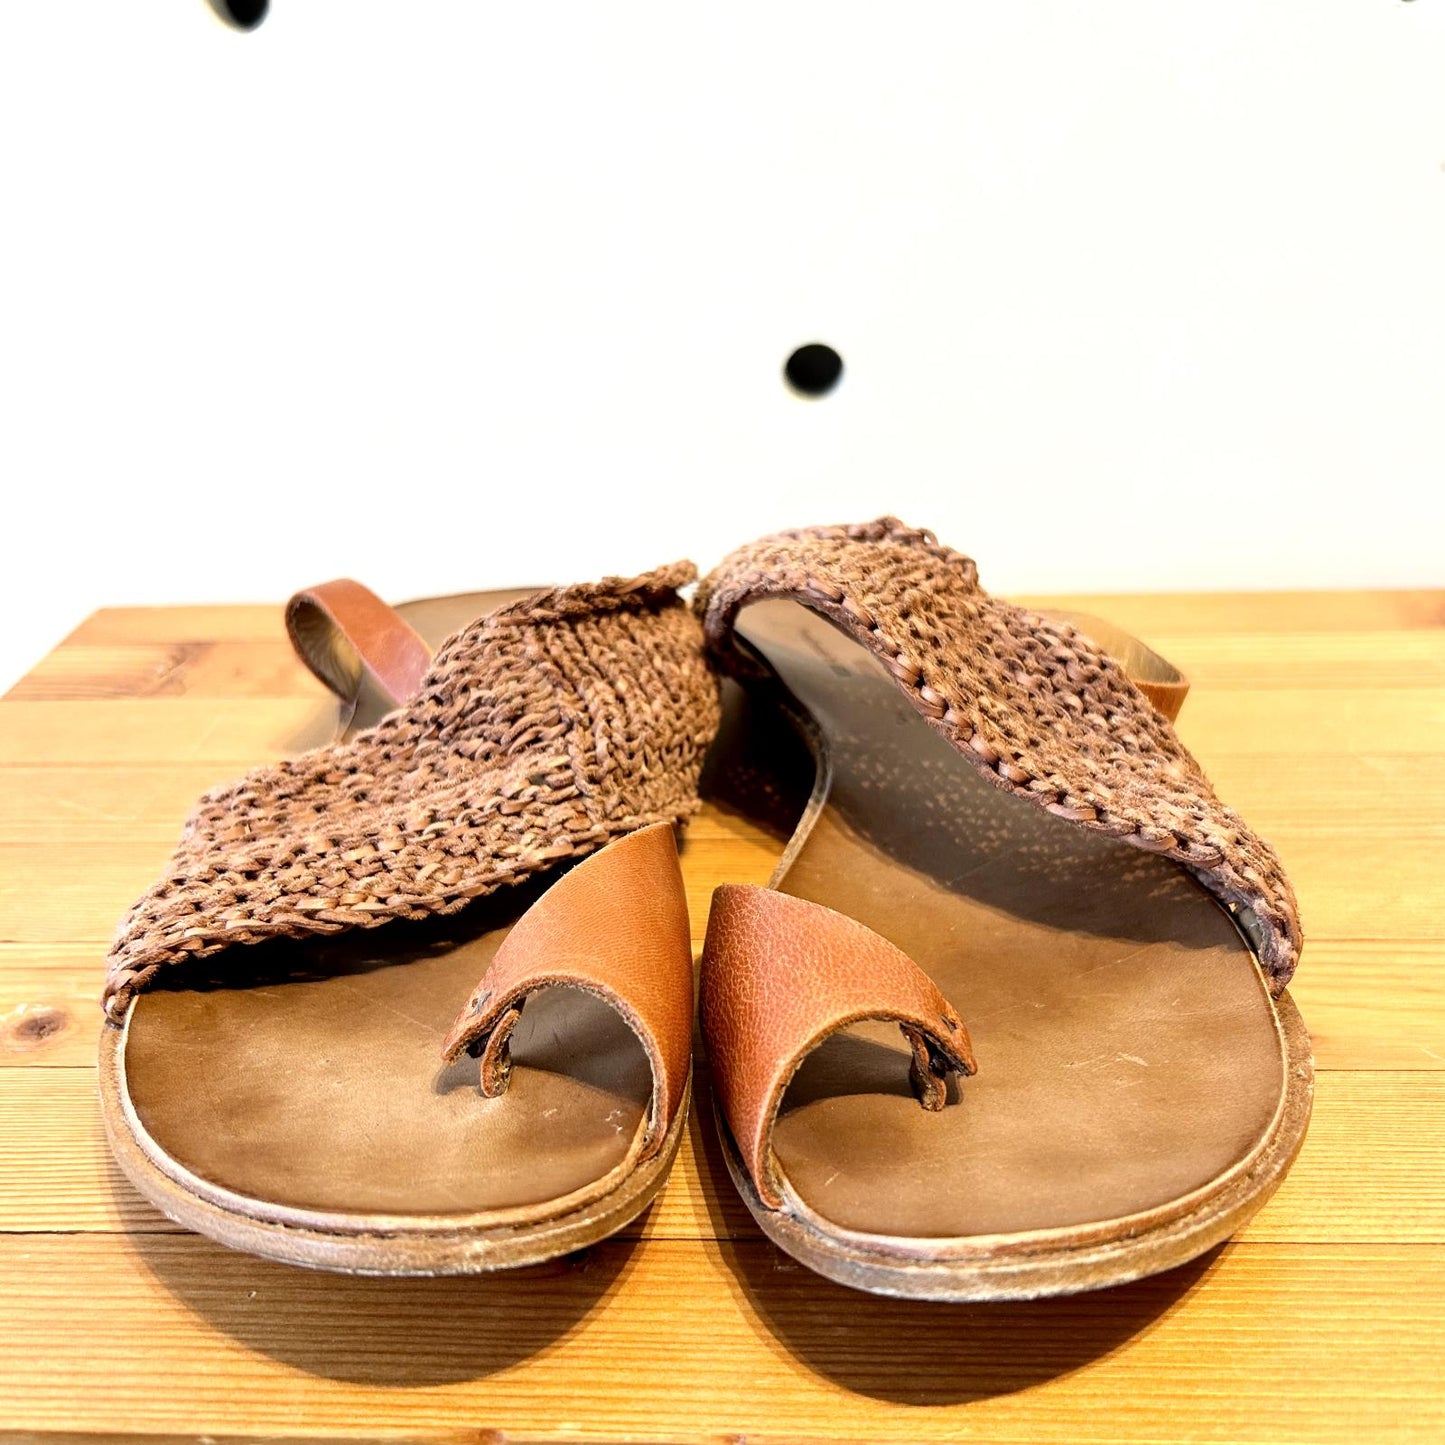 39 / 9 - Cydwoq Brown Kiosk Leather & Rattan Cross Strap Sandals Shoes 1125KG